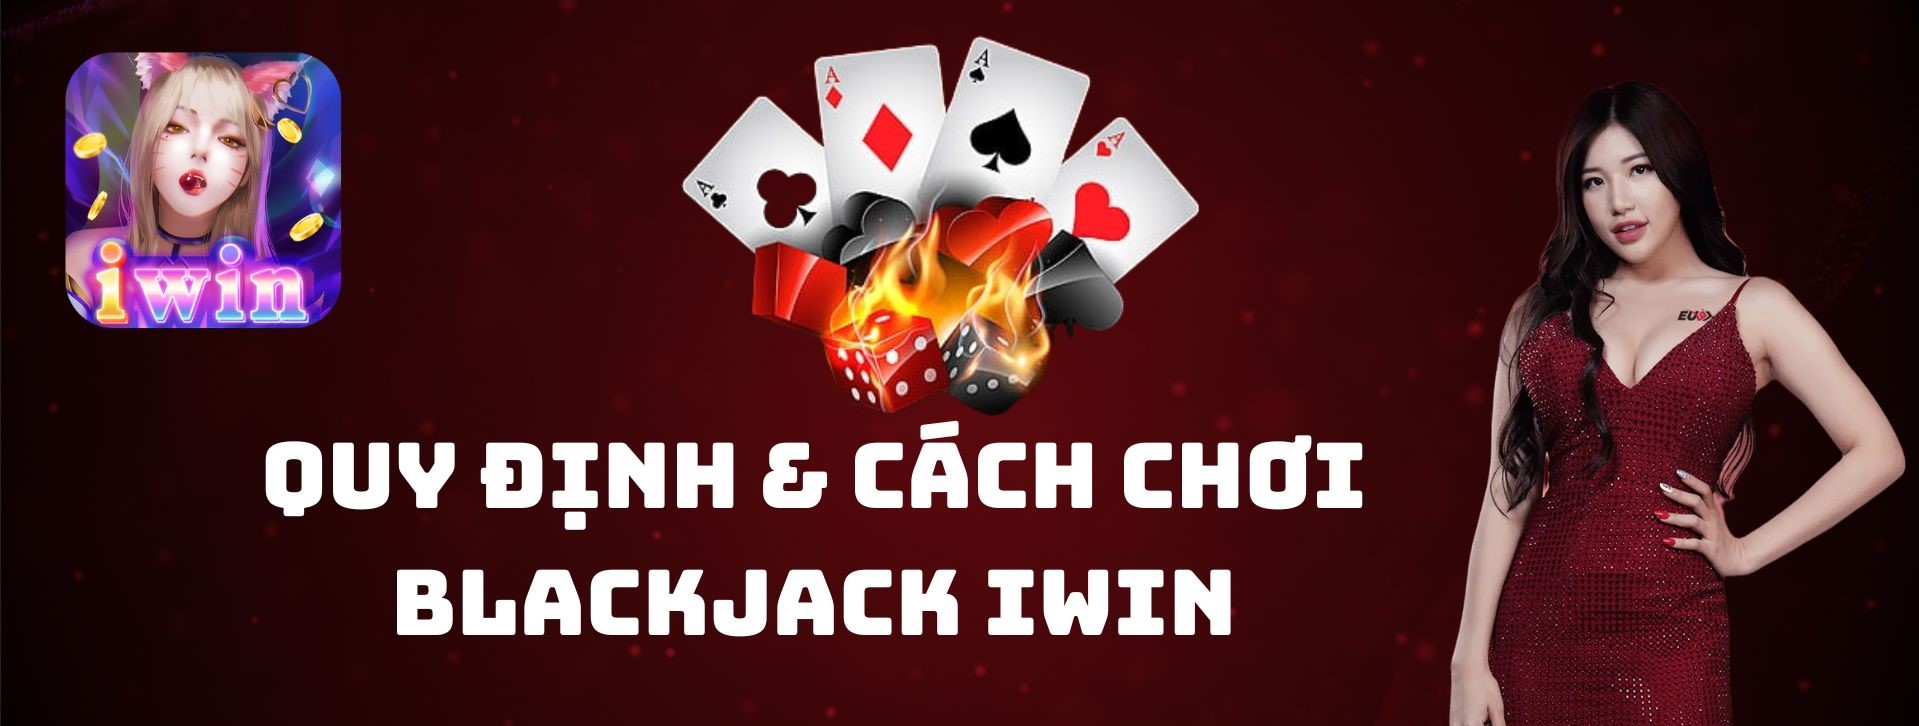 Game bài Blackjack IWIN siêu hấp dẫn